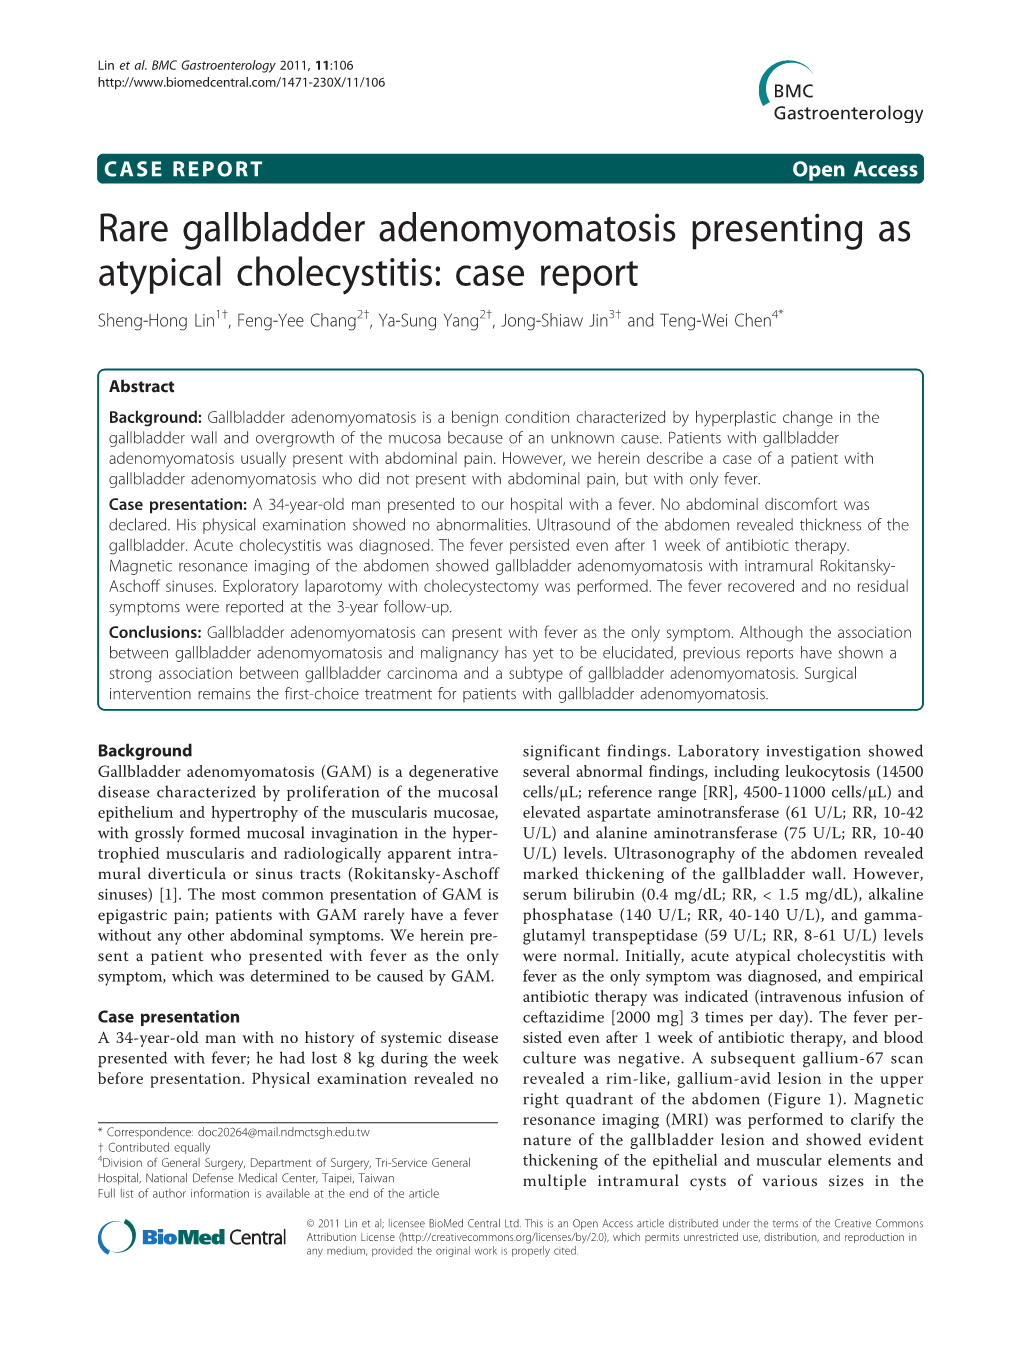 Rare Gallbladder Adenomyomatosis Presenting